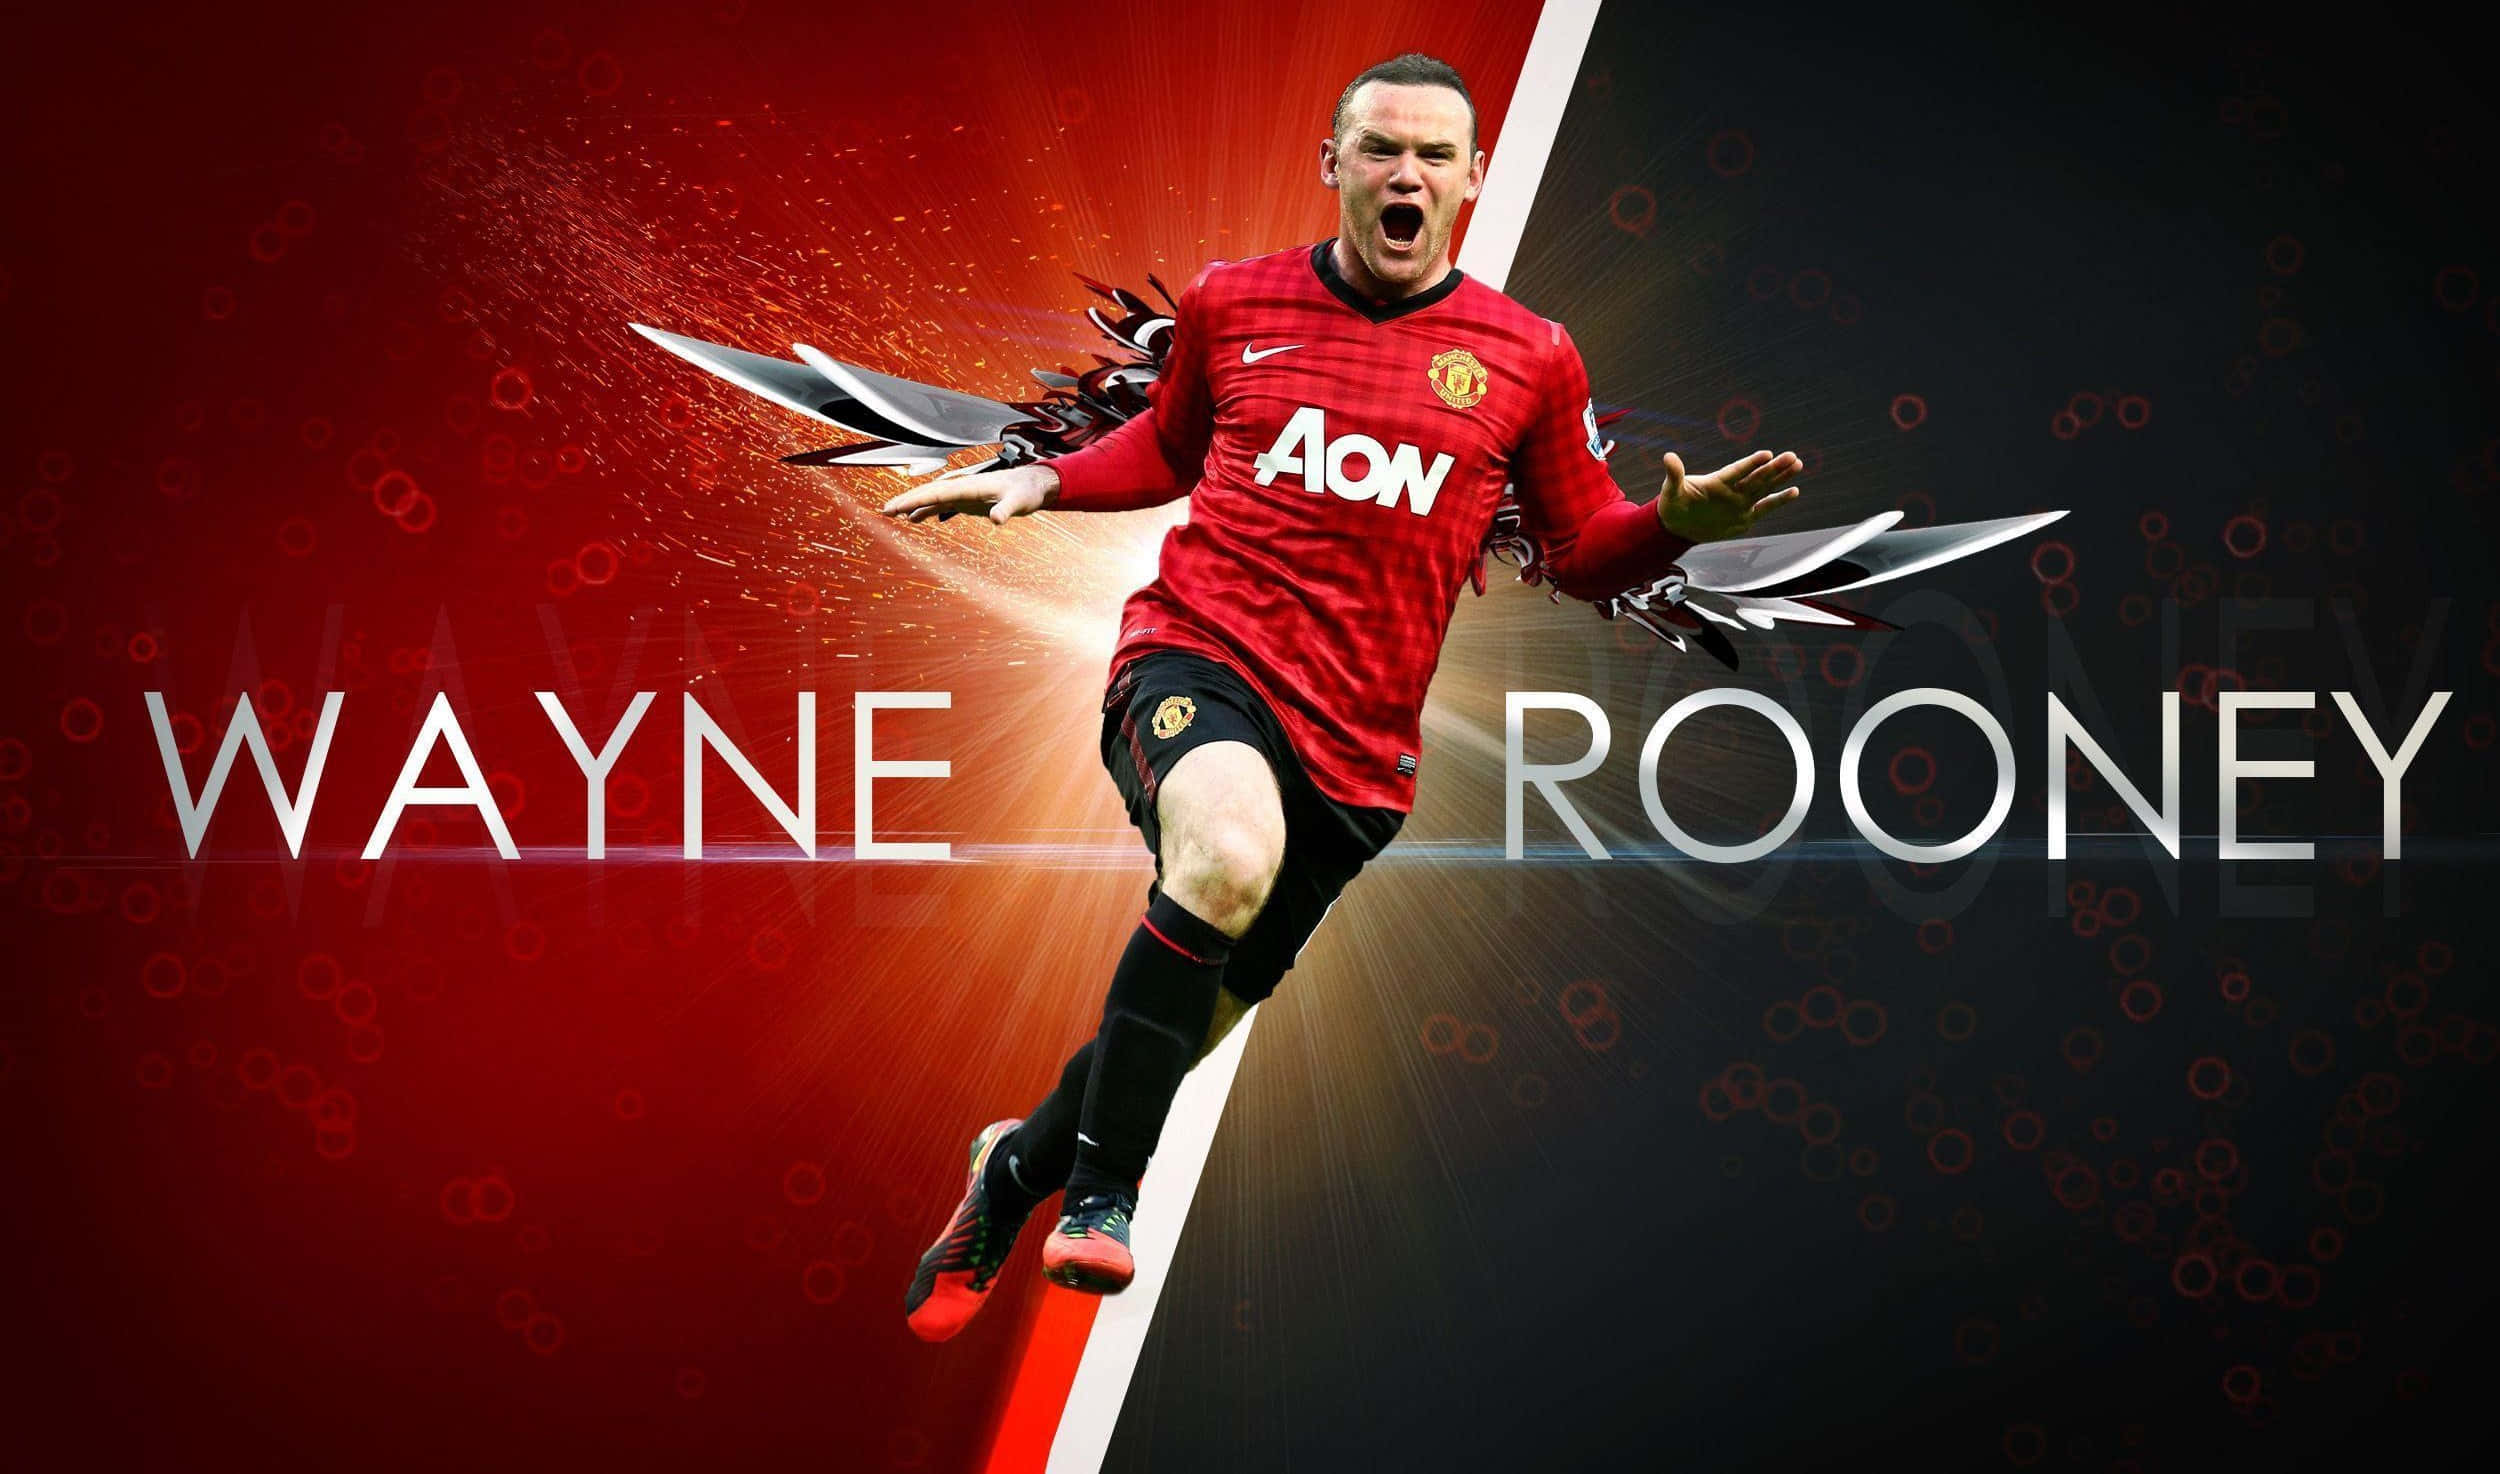 Wayne Rooney showing his skill